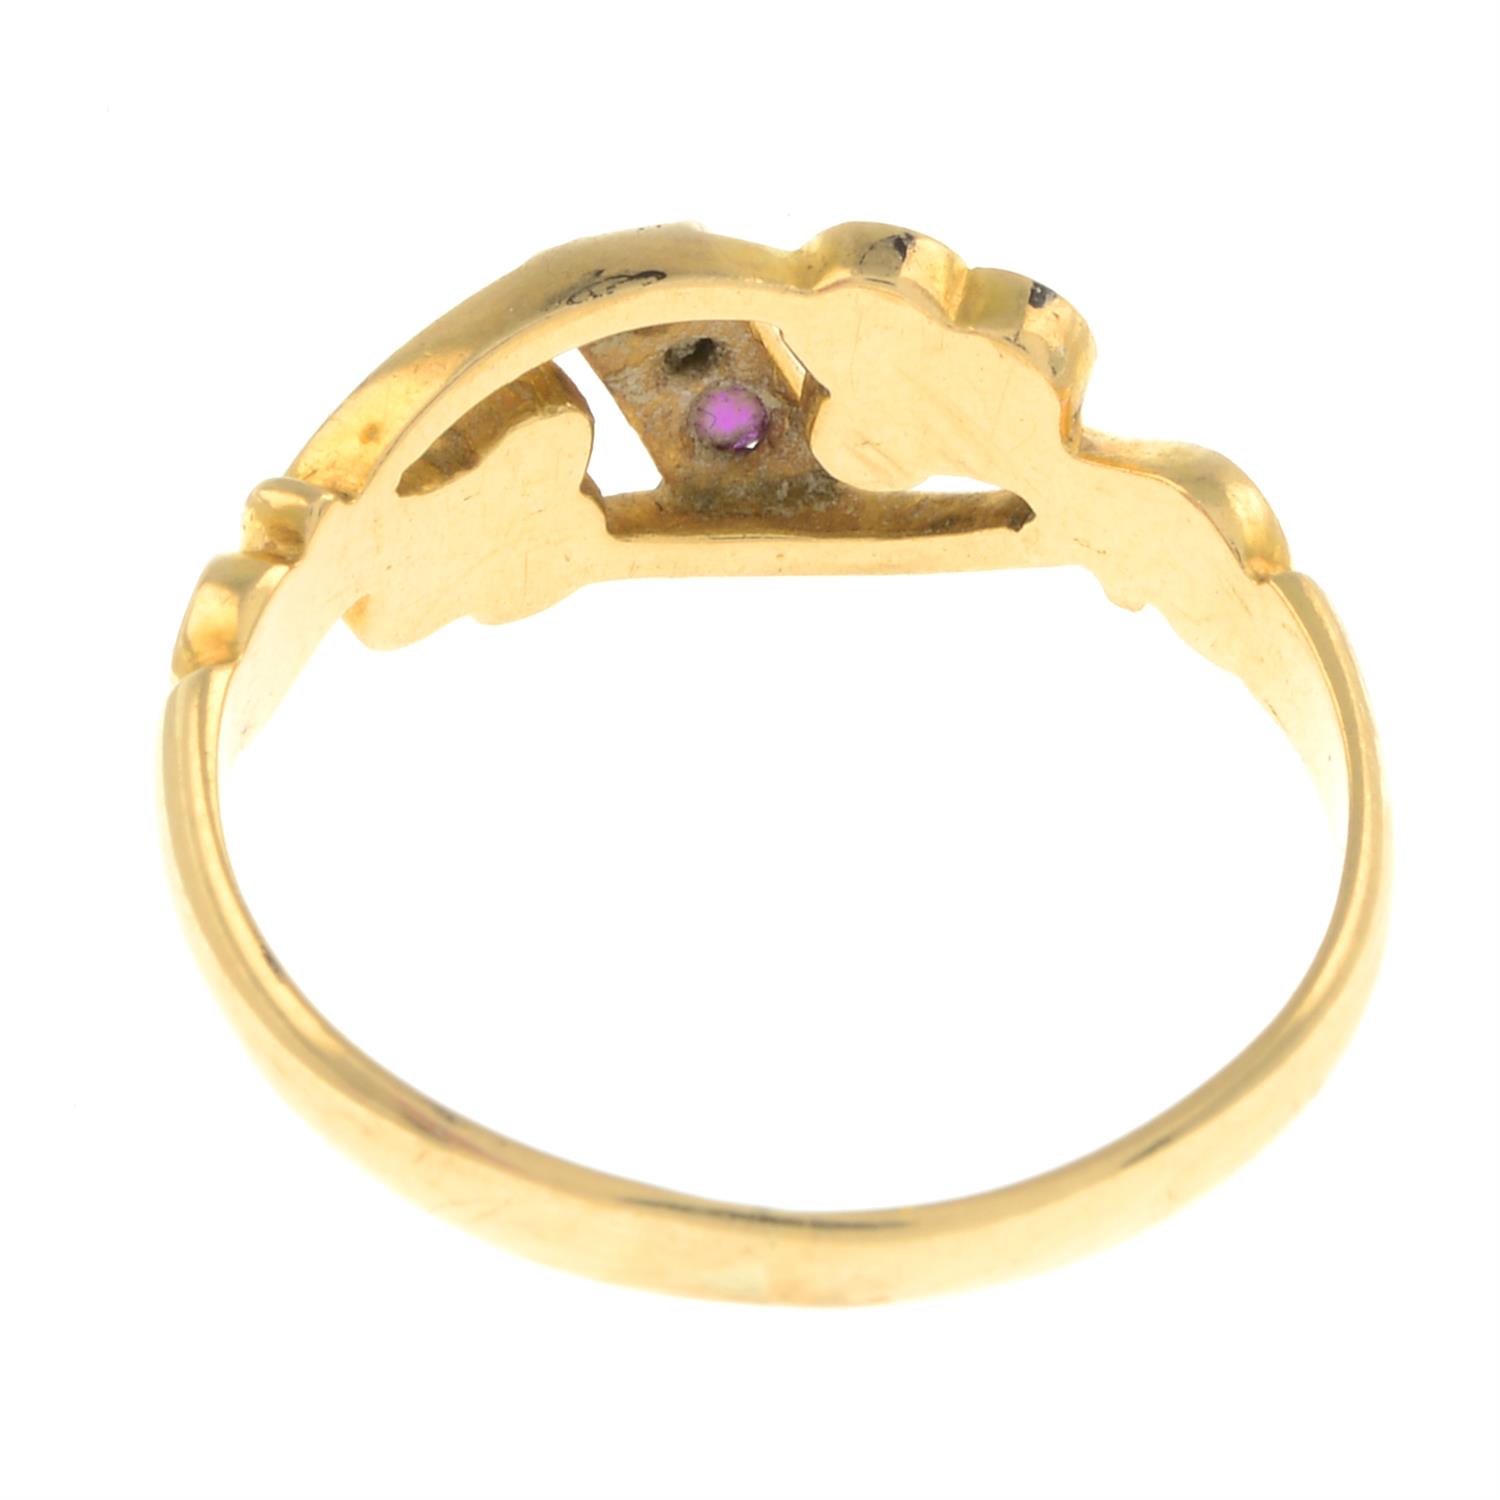 Edwardian18ct gold ruby, split pearl & diamond ring - Image 2 of 2